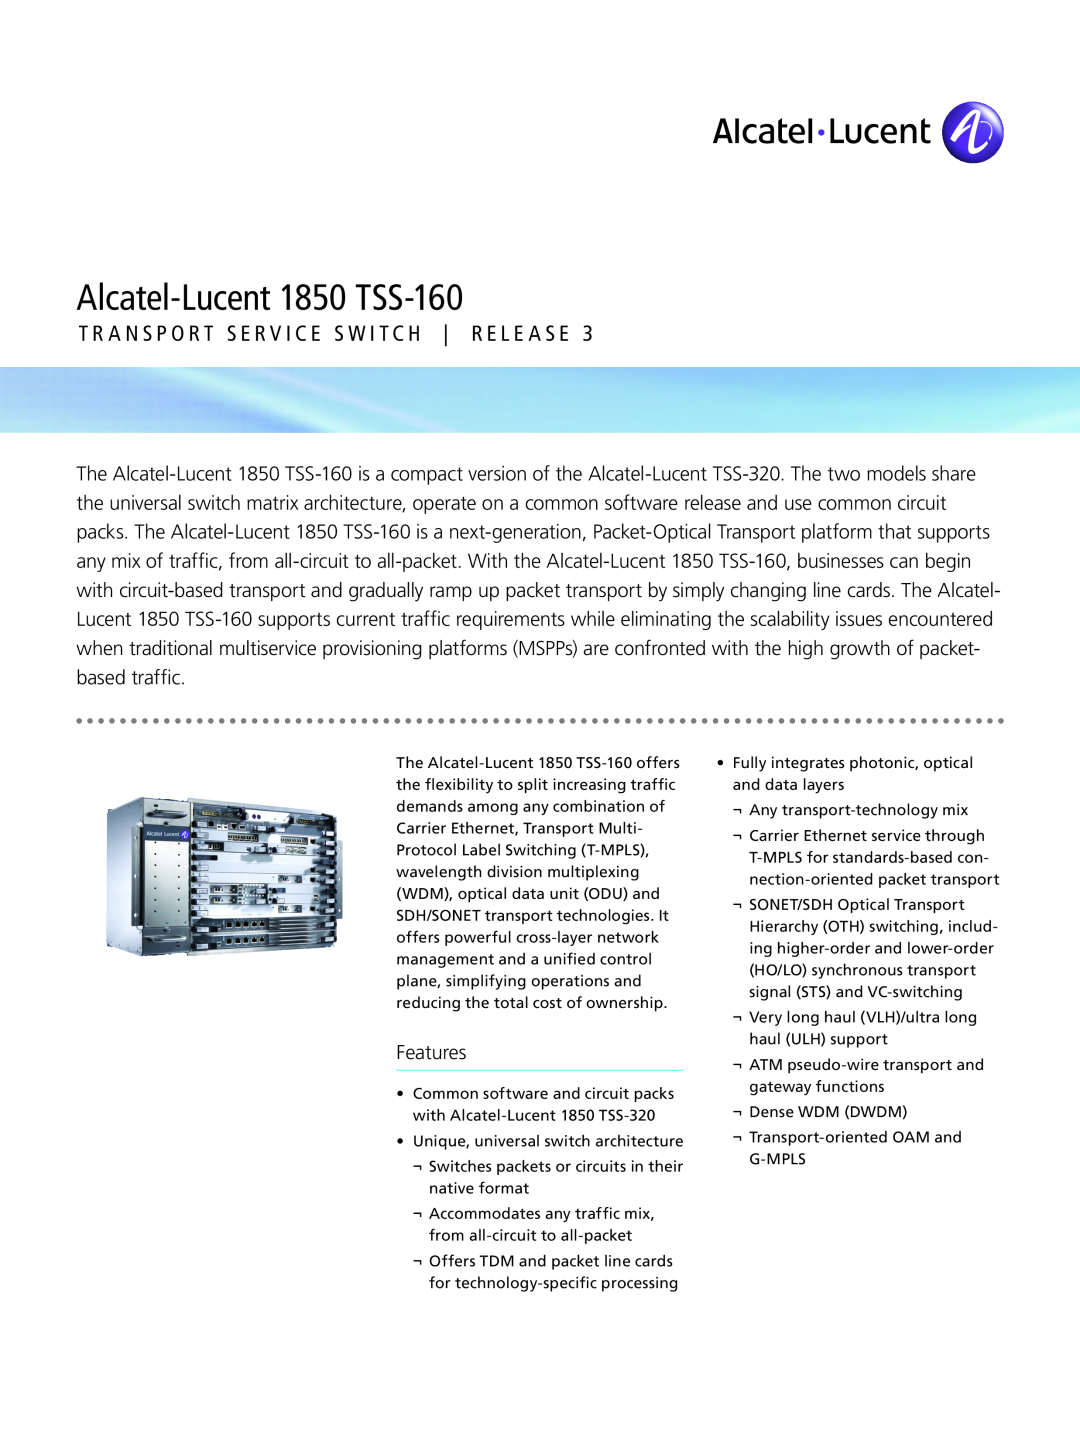 Alcatel-Lucent manual Alcatel-Lucent 1850 TSS-160, T r a n s p o r t S e r v i c e S w i t c h R e l e a s e 